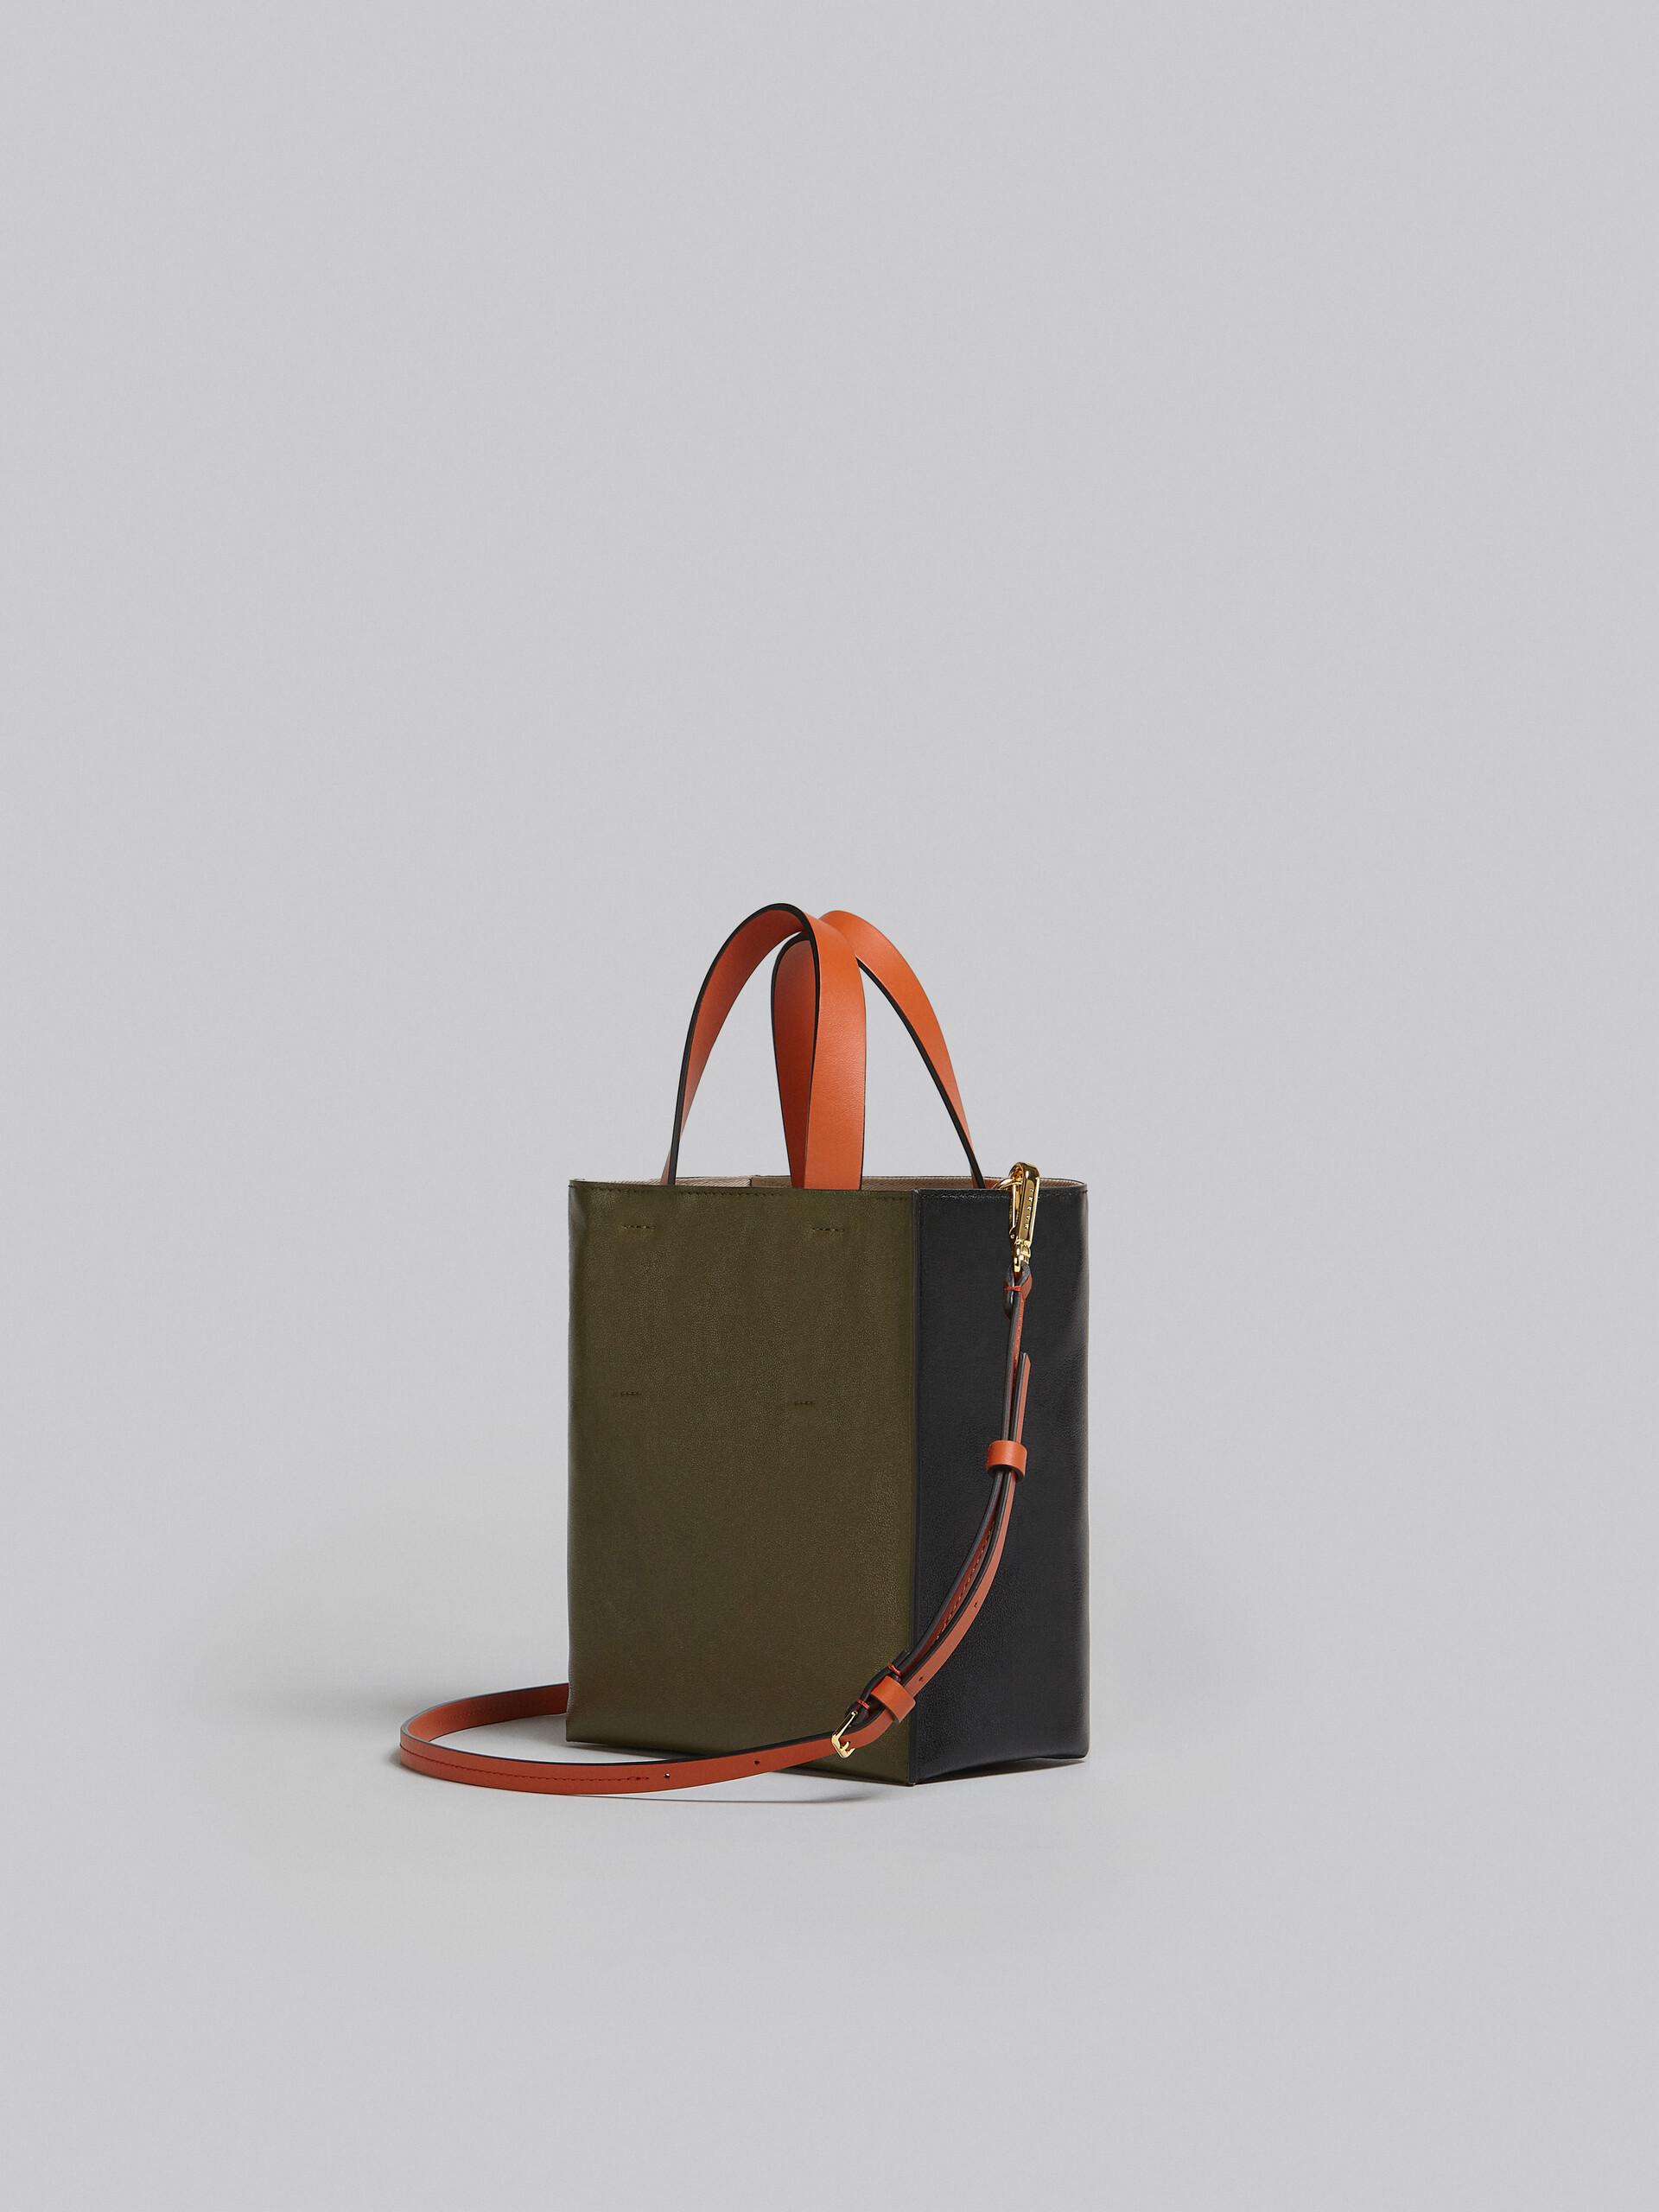 Museo Soft Bag Mini in pelle grigia nera e bordeaux - Borse shopping - Image 3